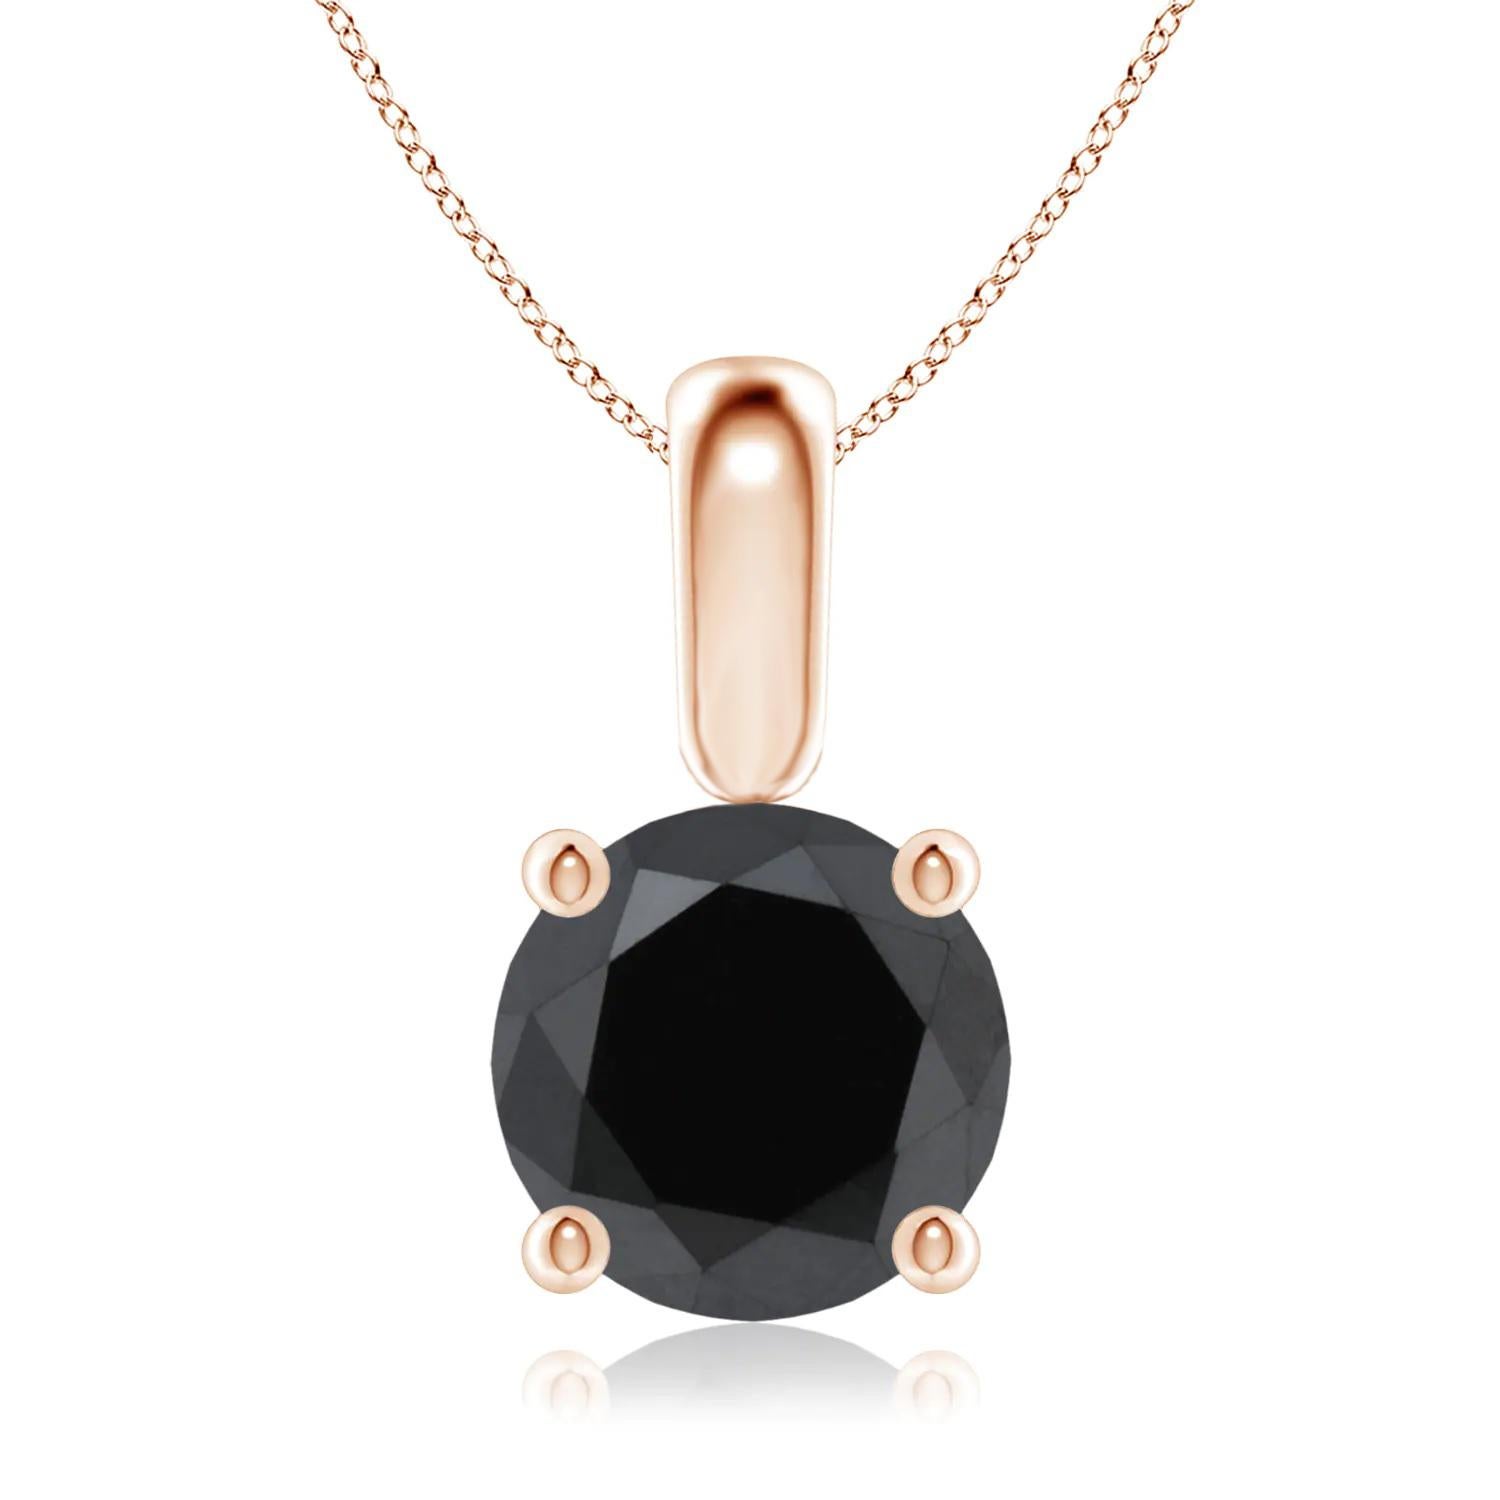 Contemporary 1.55 Carat Round Black Diamond Solitaire Pendant Necklace in 14K Rose Gold